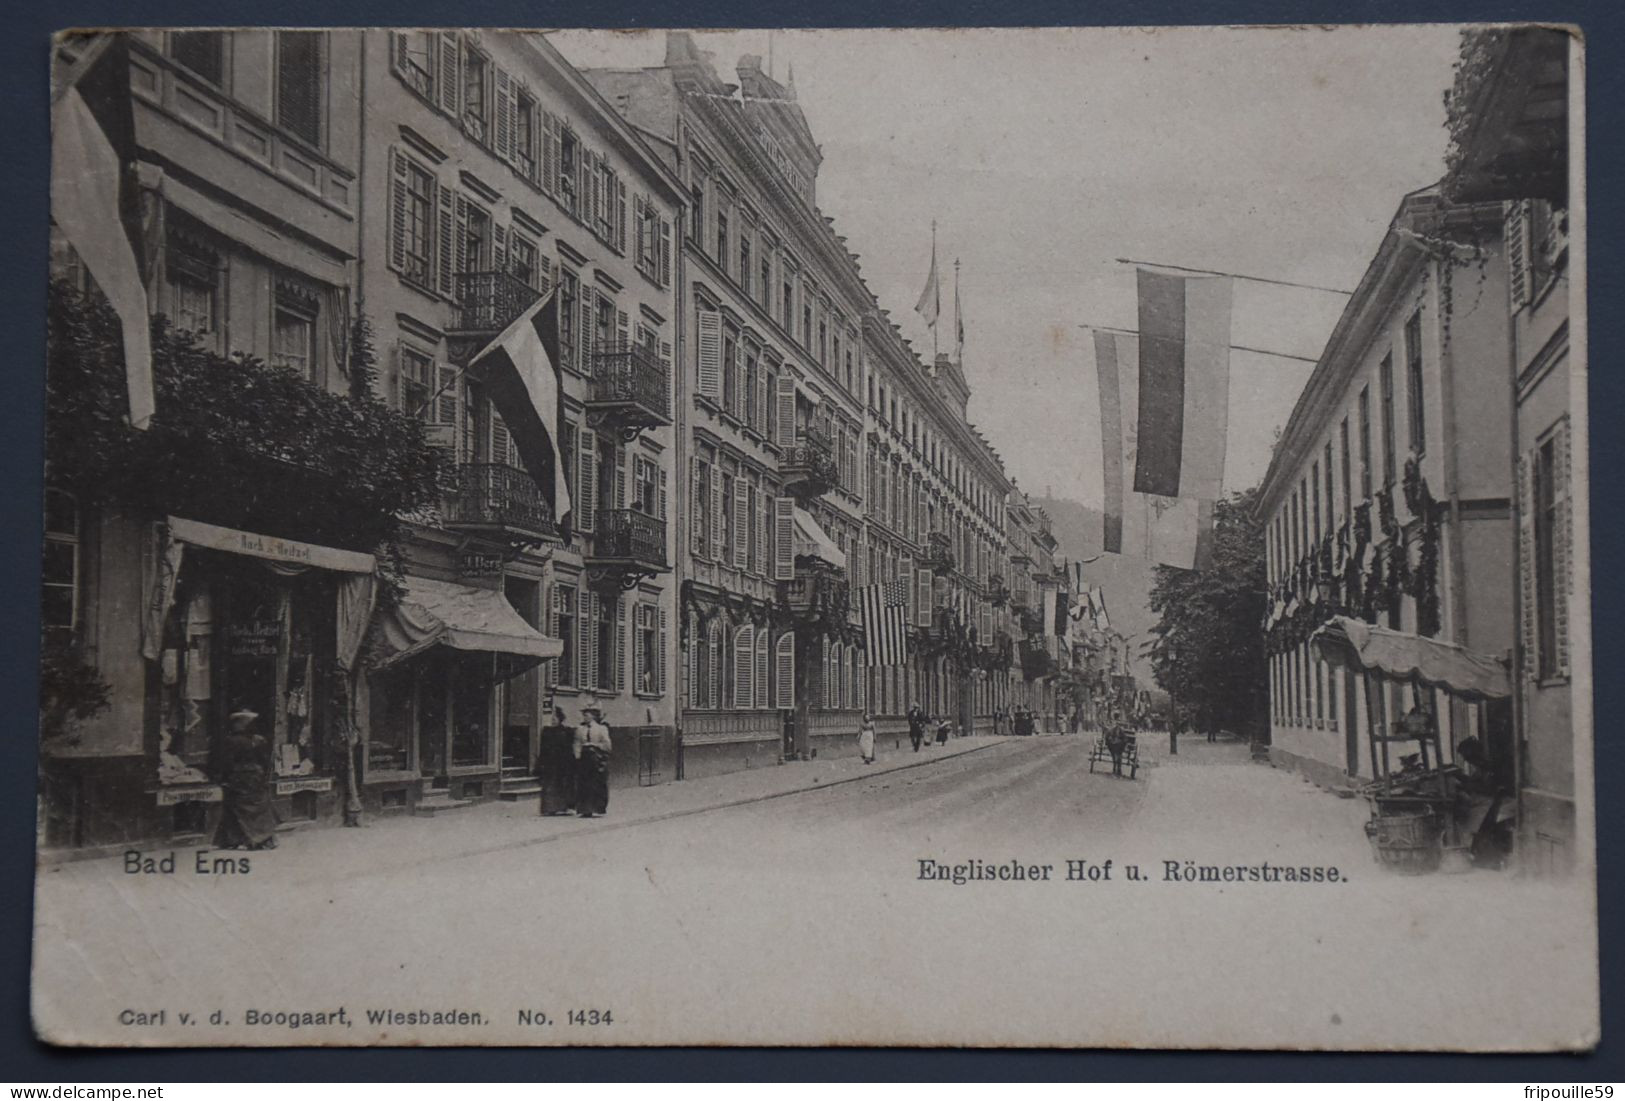 Bad Ems - Englischer Hof U. Römerstrasse - Carl V. D. Boogaart, N° 1434 - Circulé En 1902 - Bad Ems